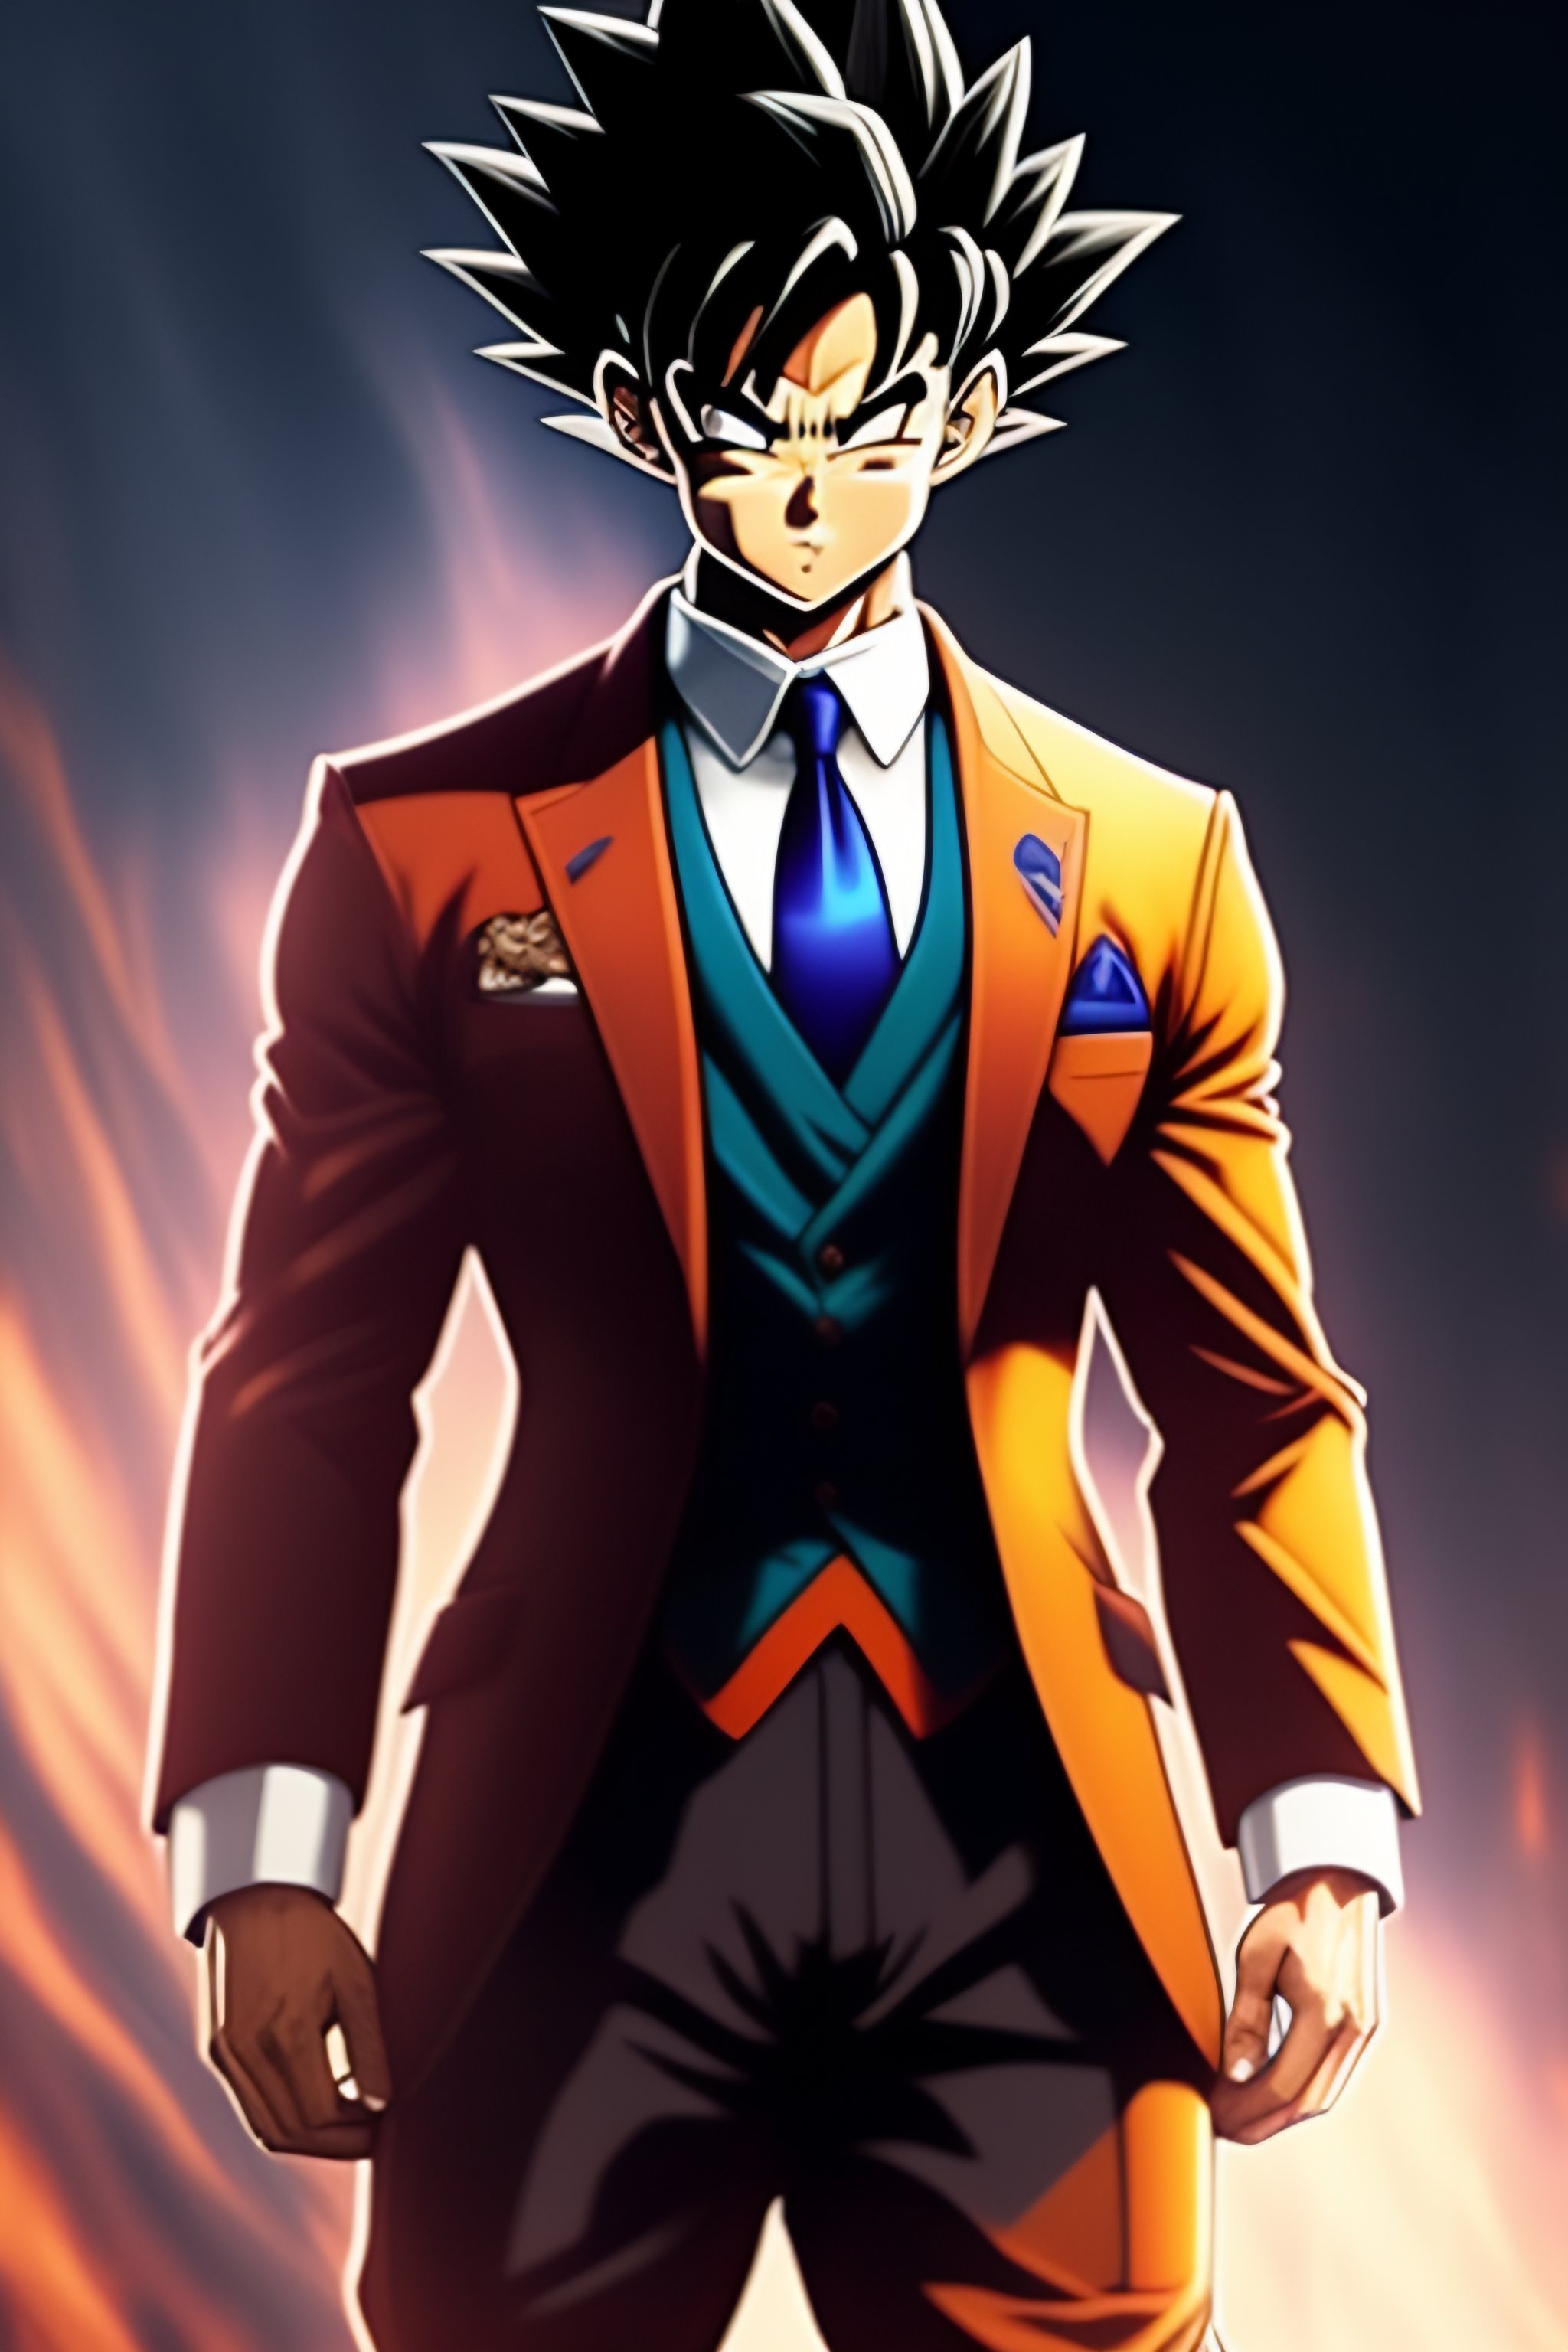 Goku wearing a suit